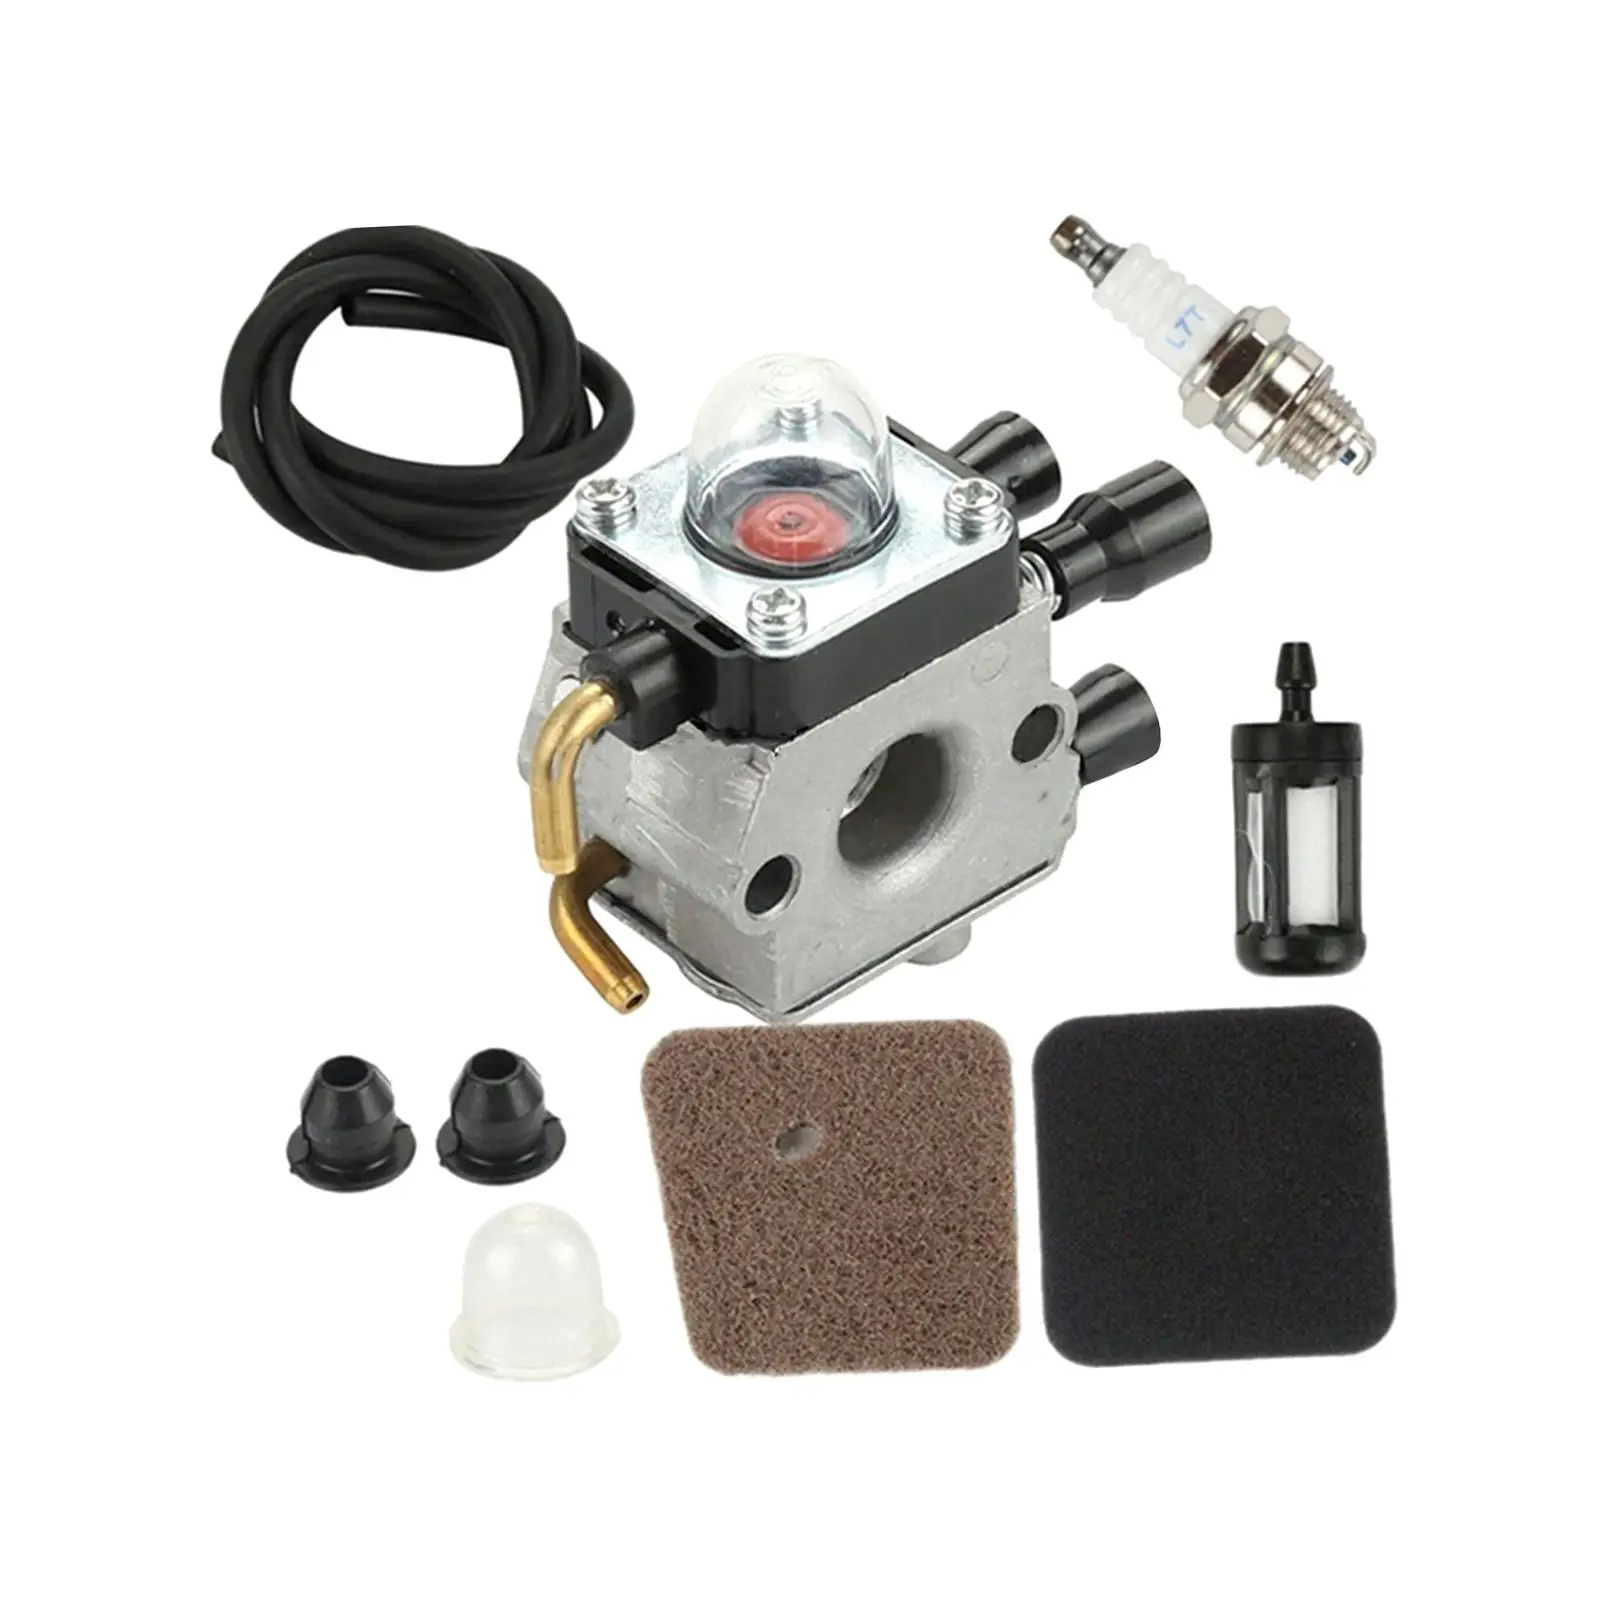 Carburetor with Air Filter Fuel Line Kit Parts for Stihl FS45 FC55 FS55R